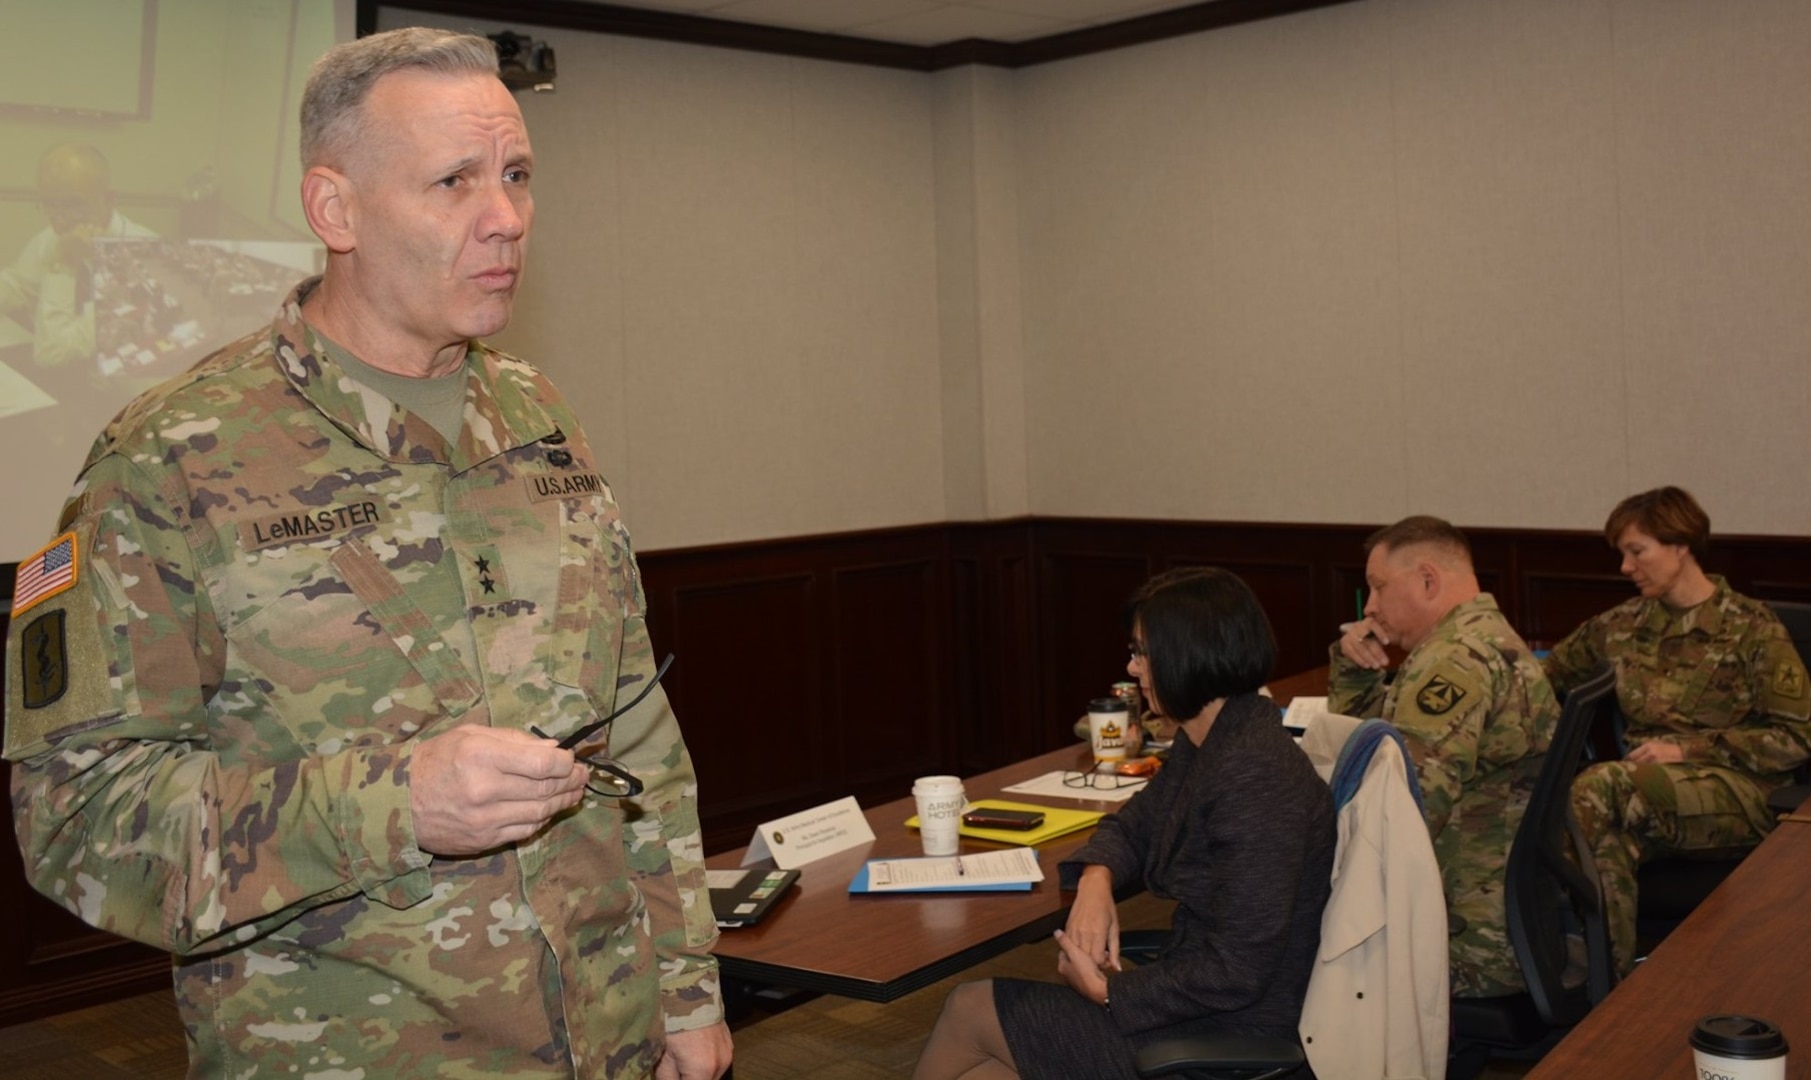 Maj. Gen. Dennis P. LeMaster, commander, U.S. Army Medical Center of Excellence, addresses senior leaders during the Army Medicine Modernization 2028 Strategy SYNCH Feb. 6.